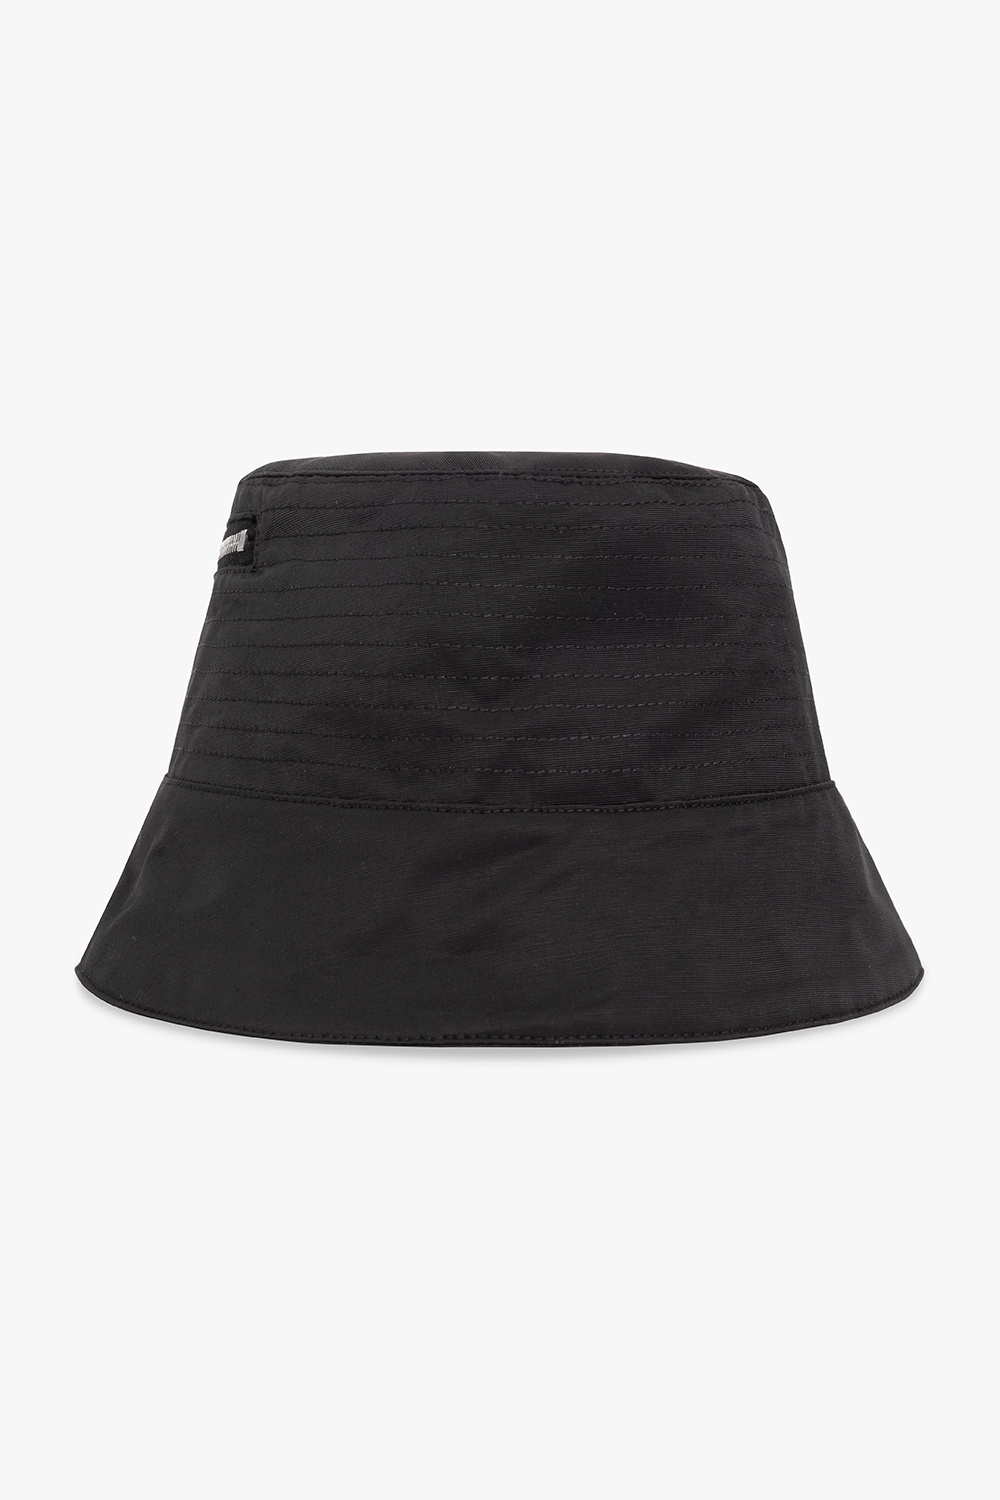 Rick Owens DRKSHDW Bucket hat atmos with pocket